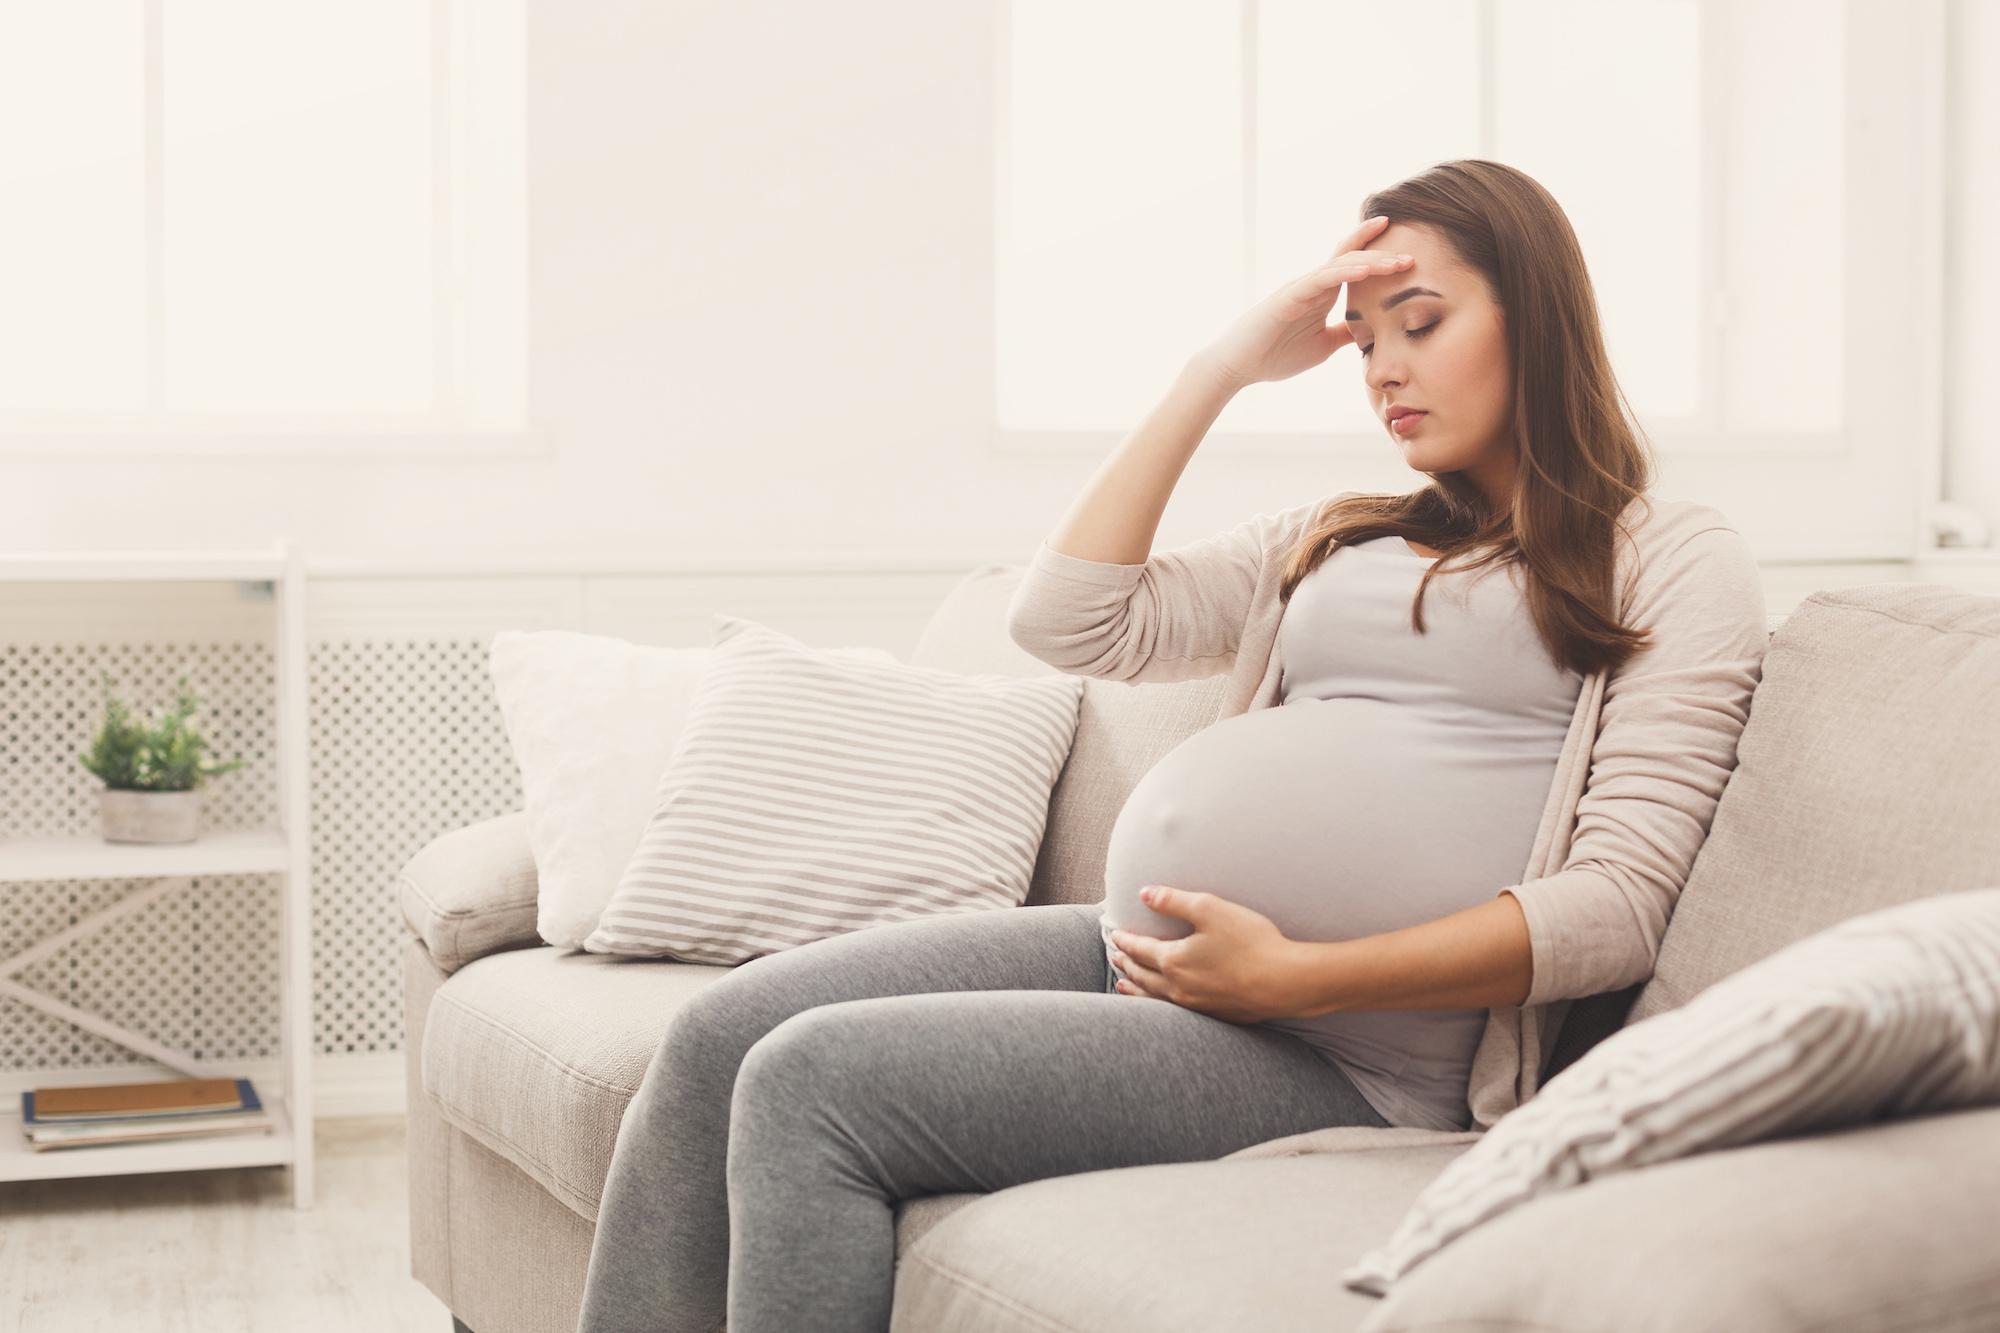 Manjak hormona štitnjače uzrok težih poroda